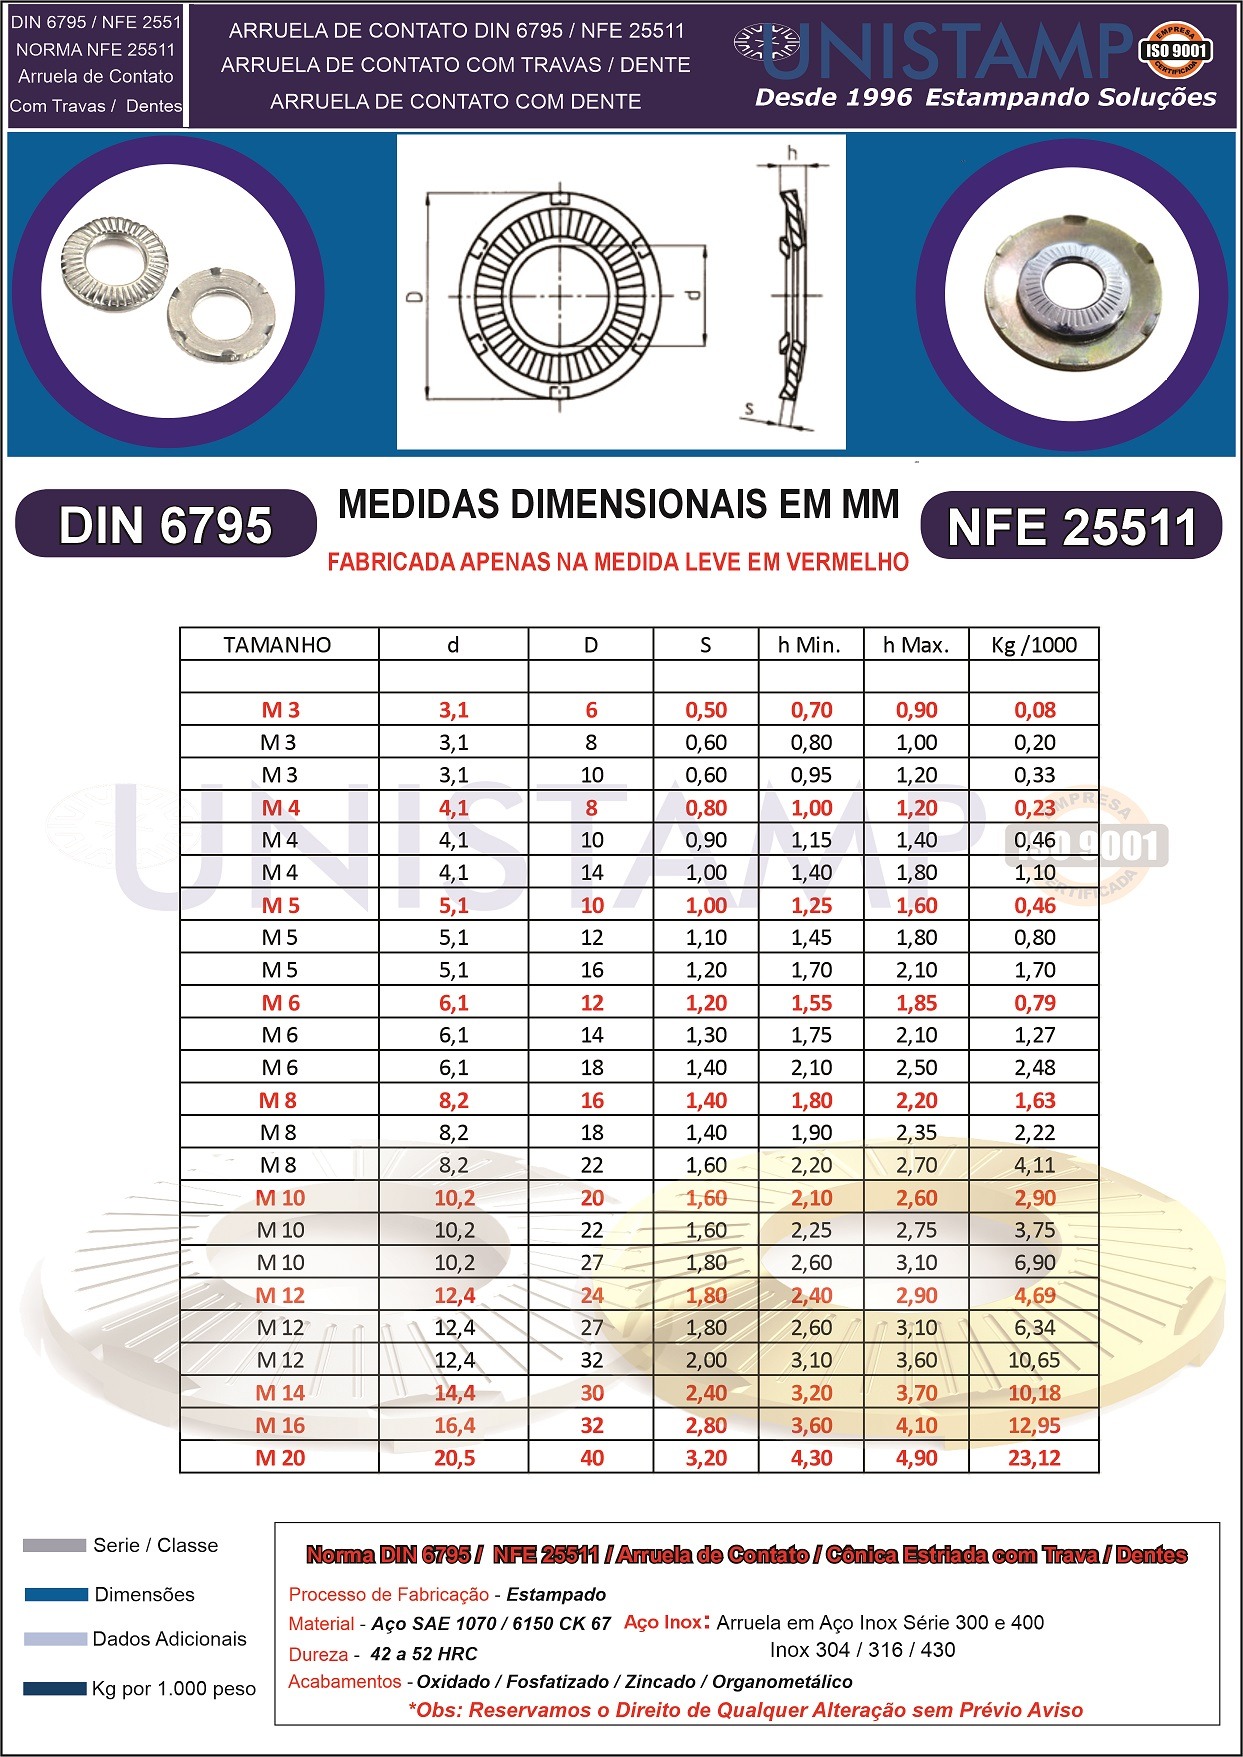 DIN 6795 NFE25511 Arruela de Contato Catalogo Dimensional